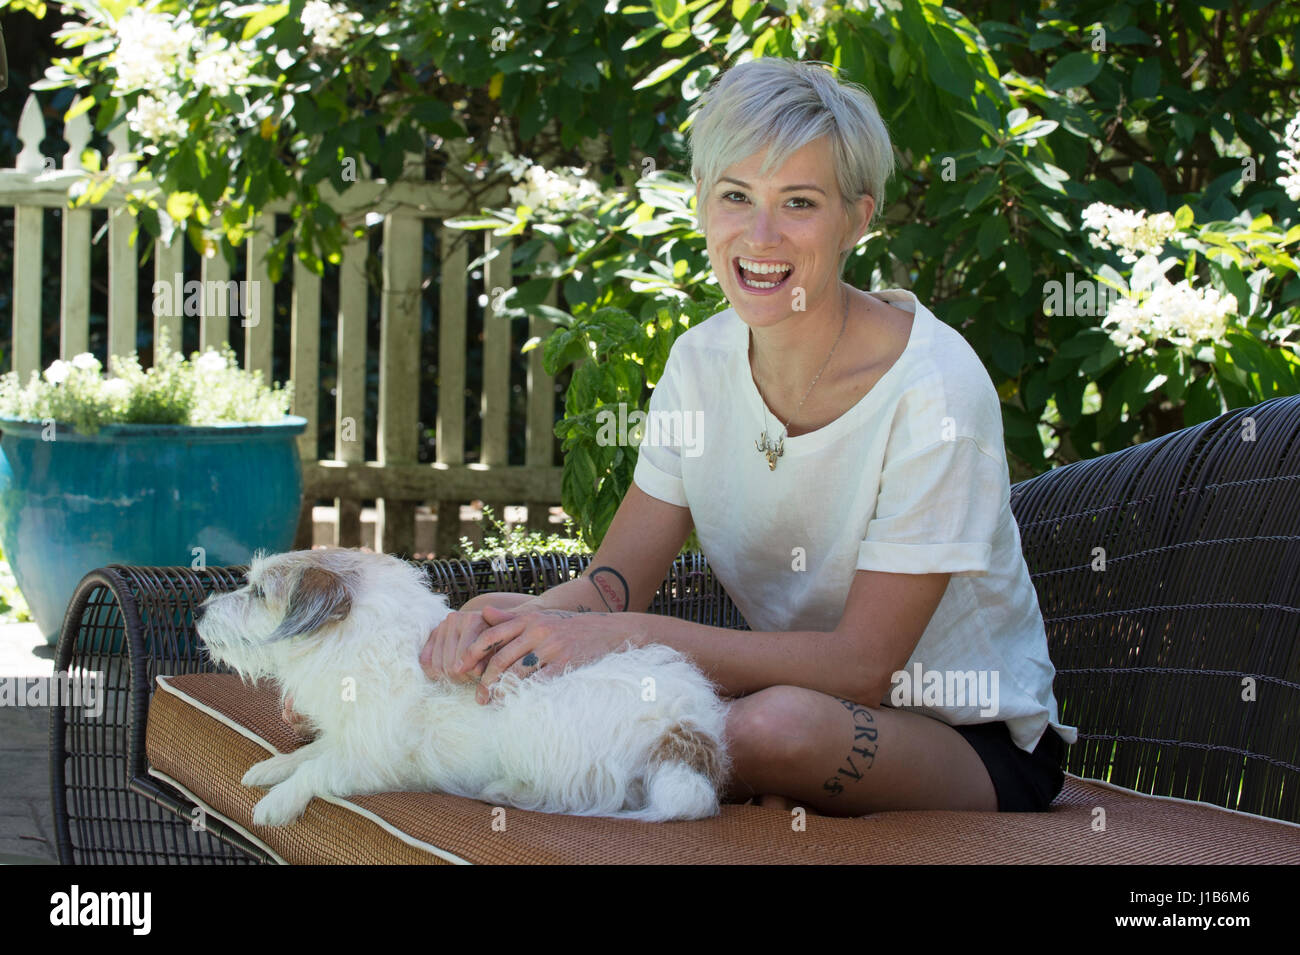 Smiling Caucasian woman petting dog on sofa outdoors Stock Photo